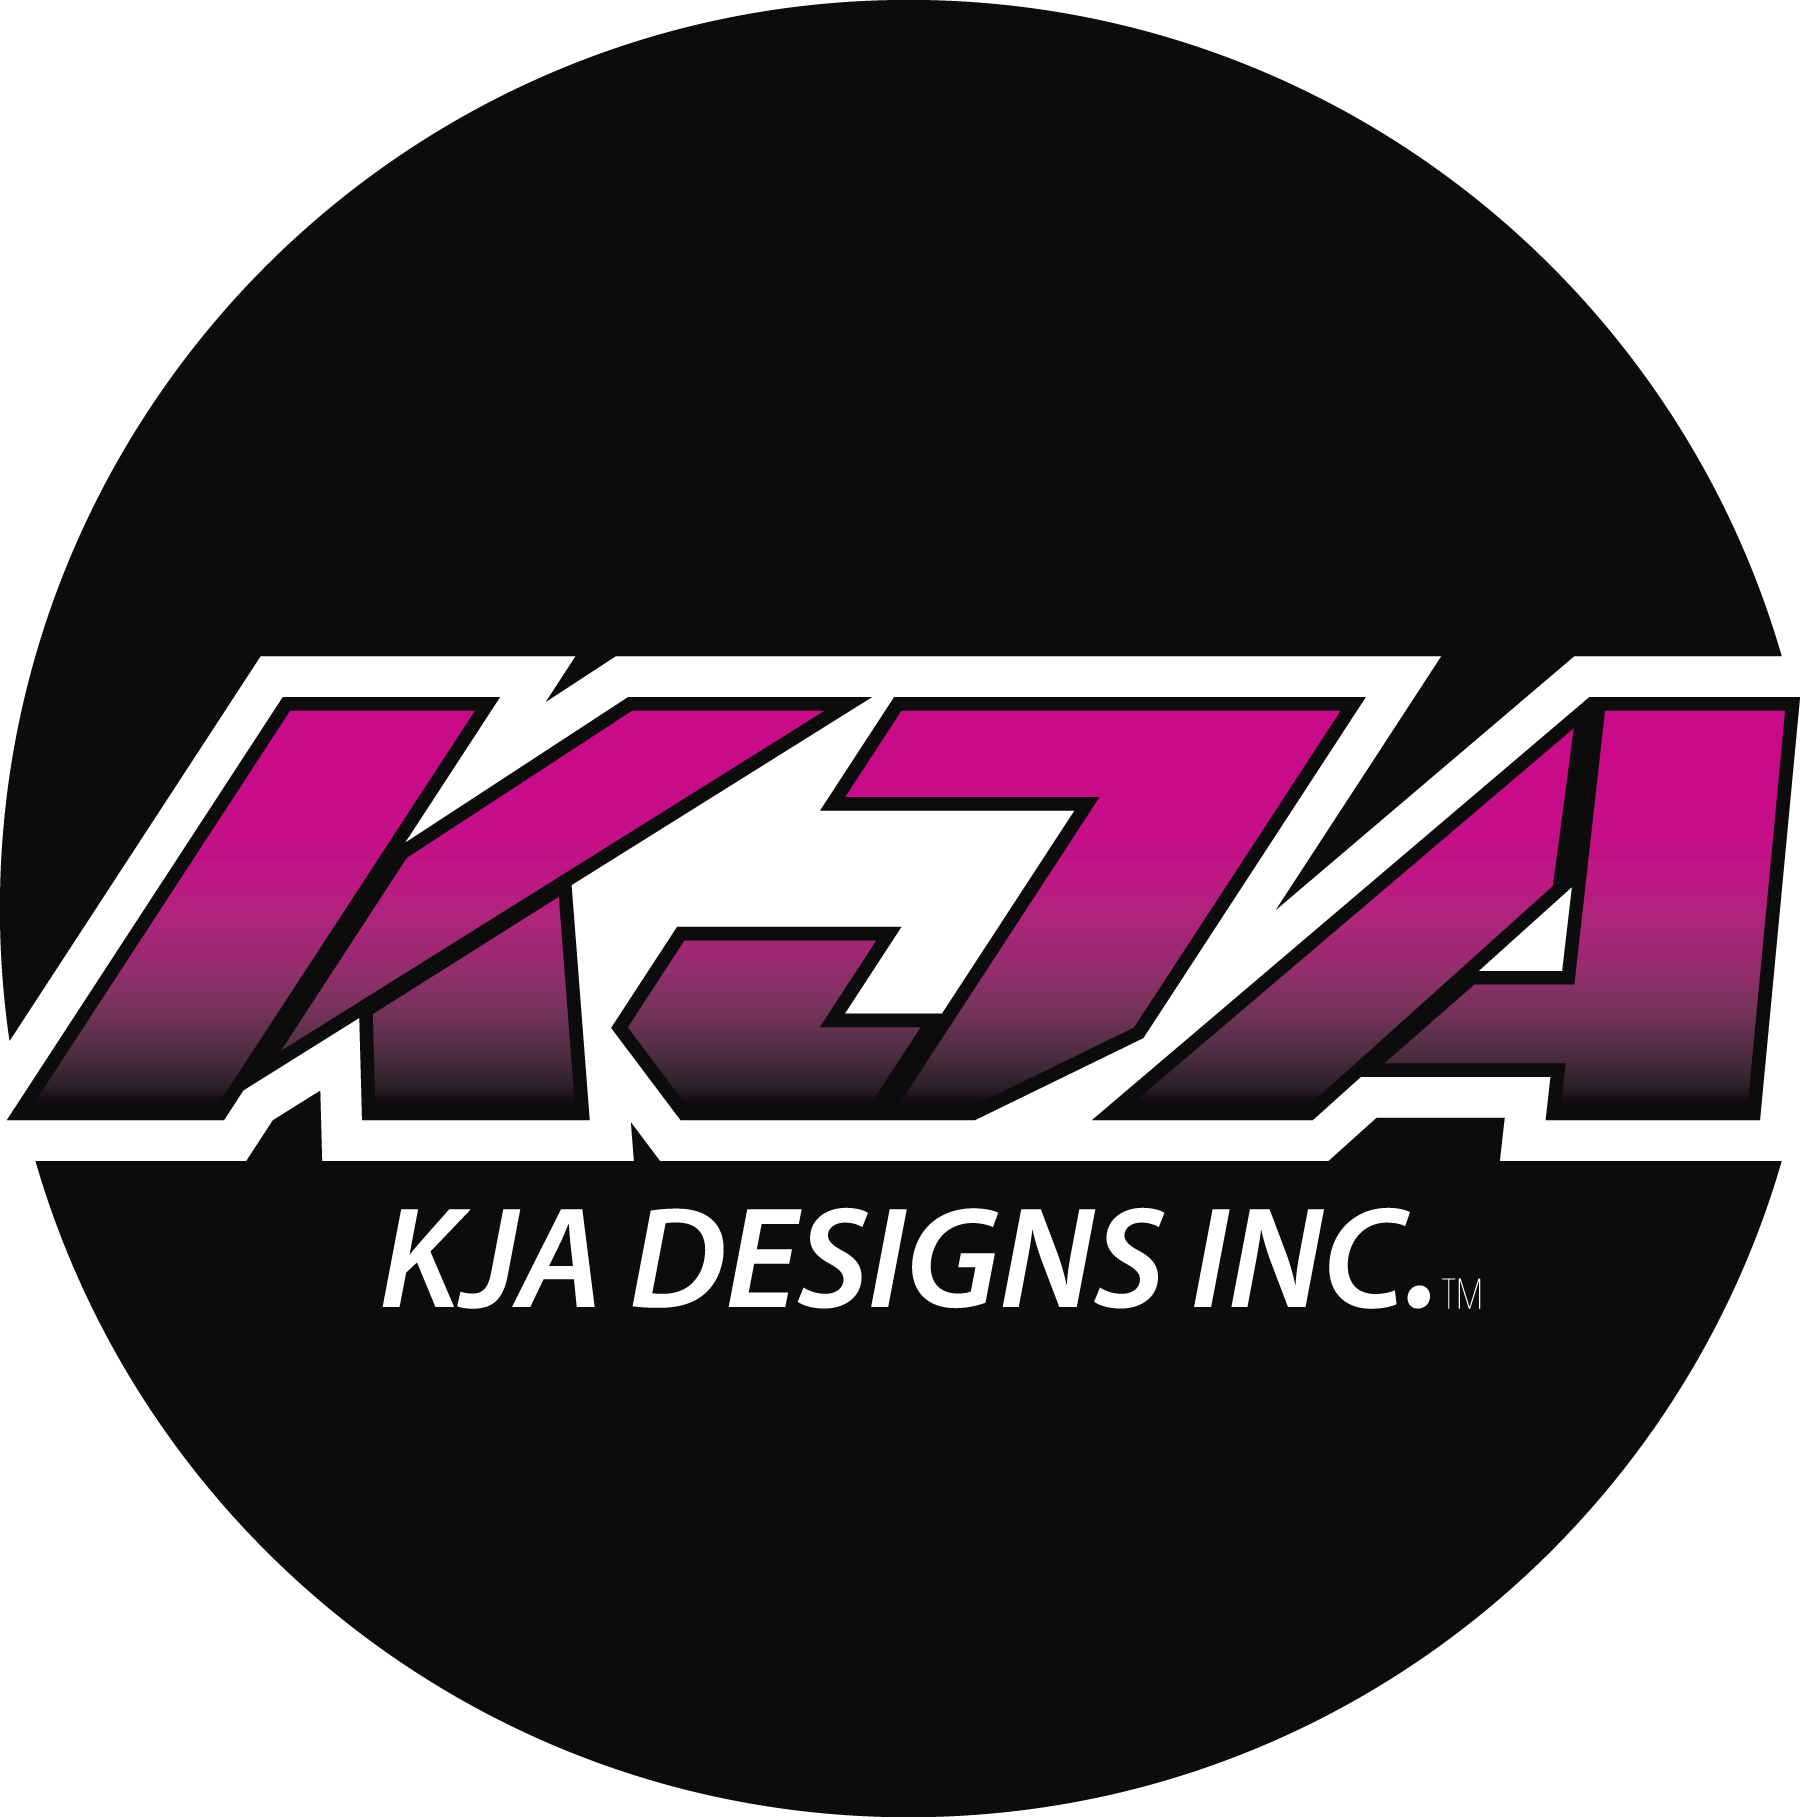 KJA Designs Inc.™ 4A on site